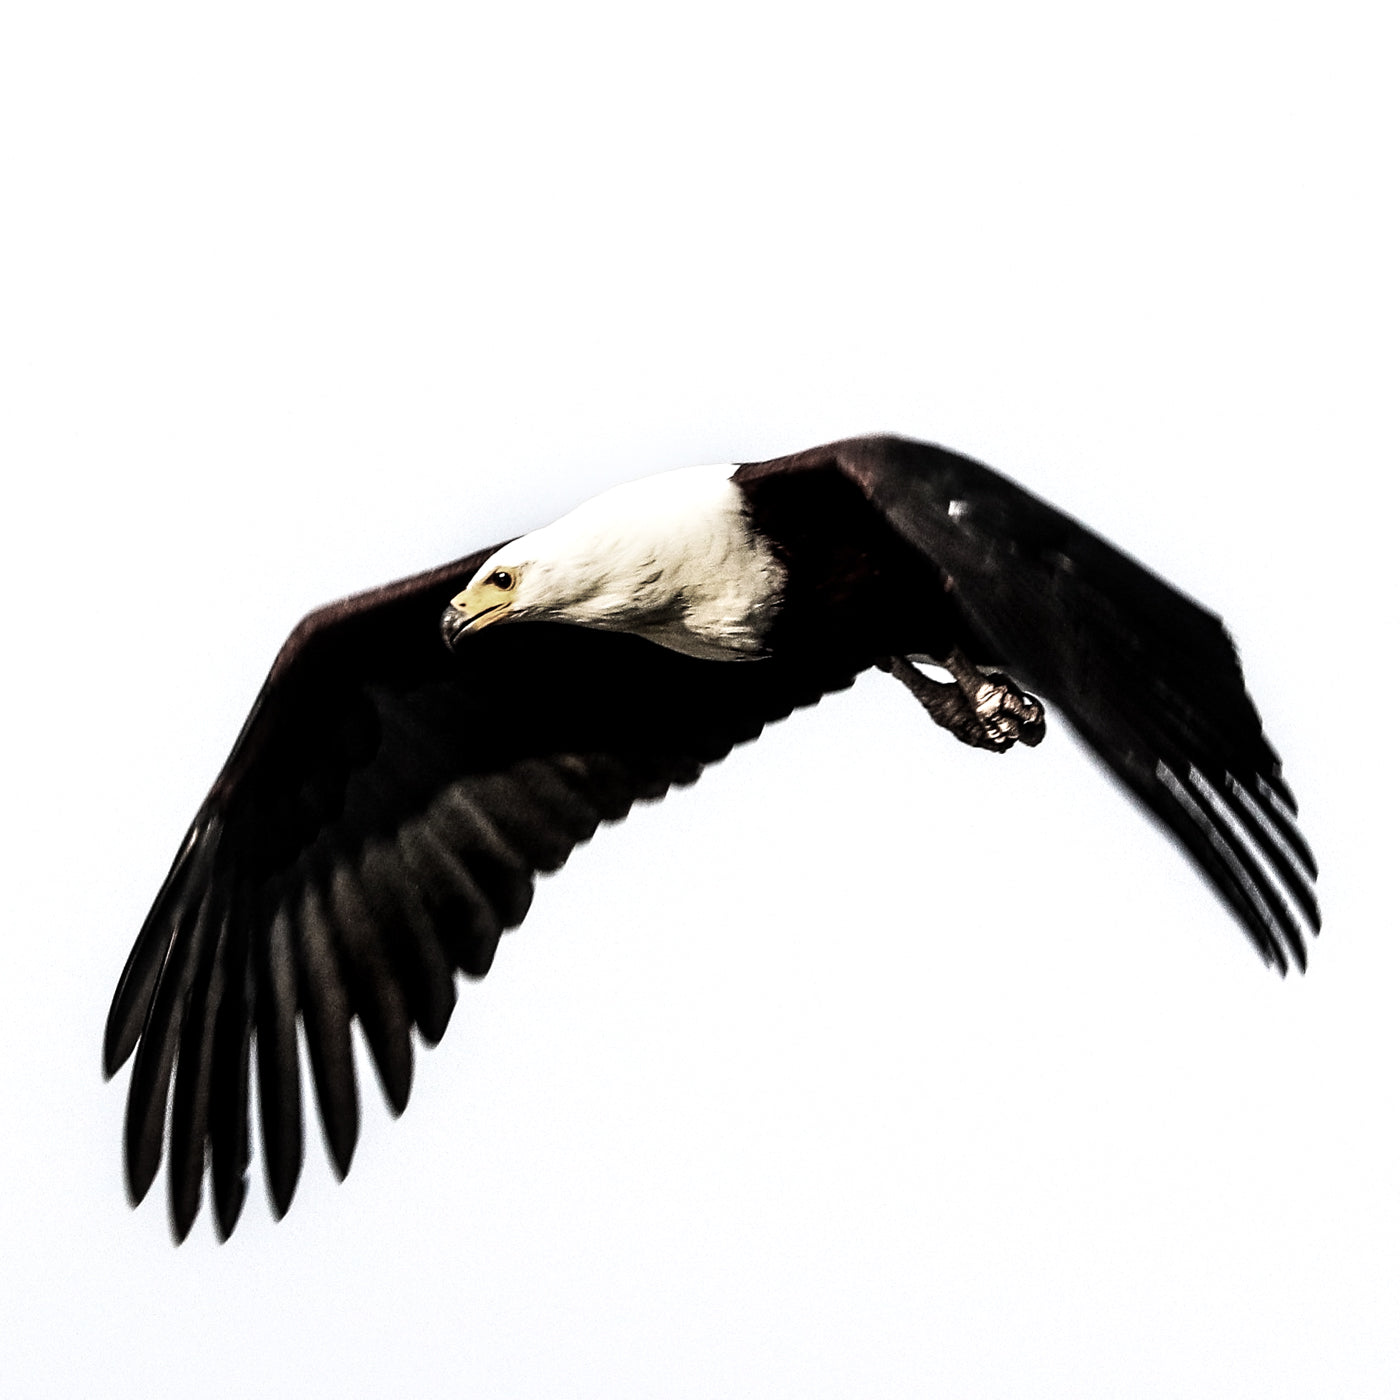 Flying fish eagle